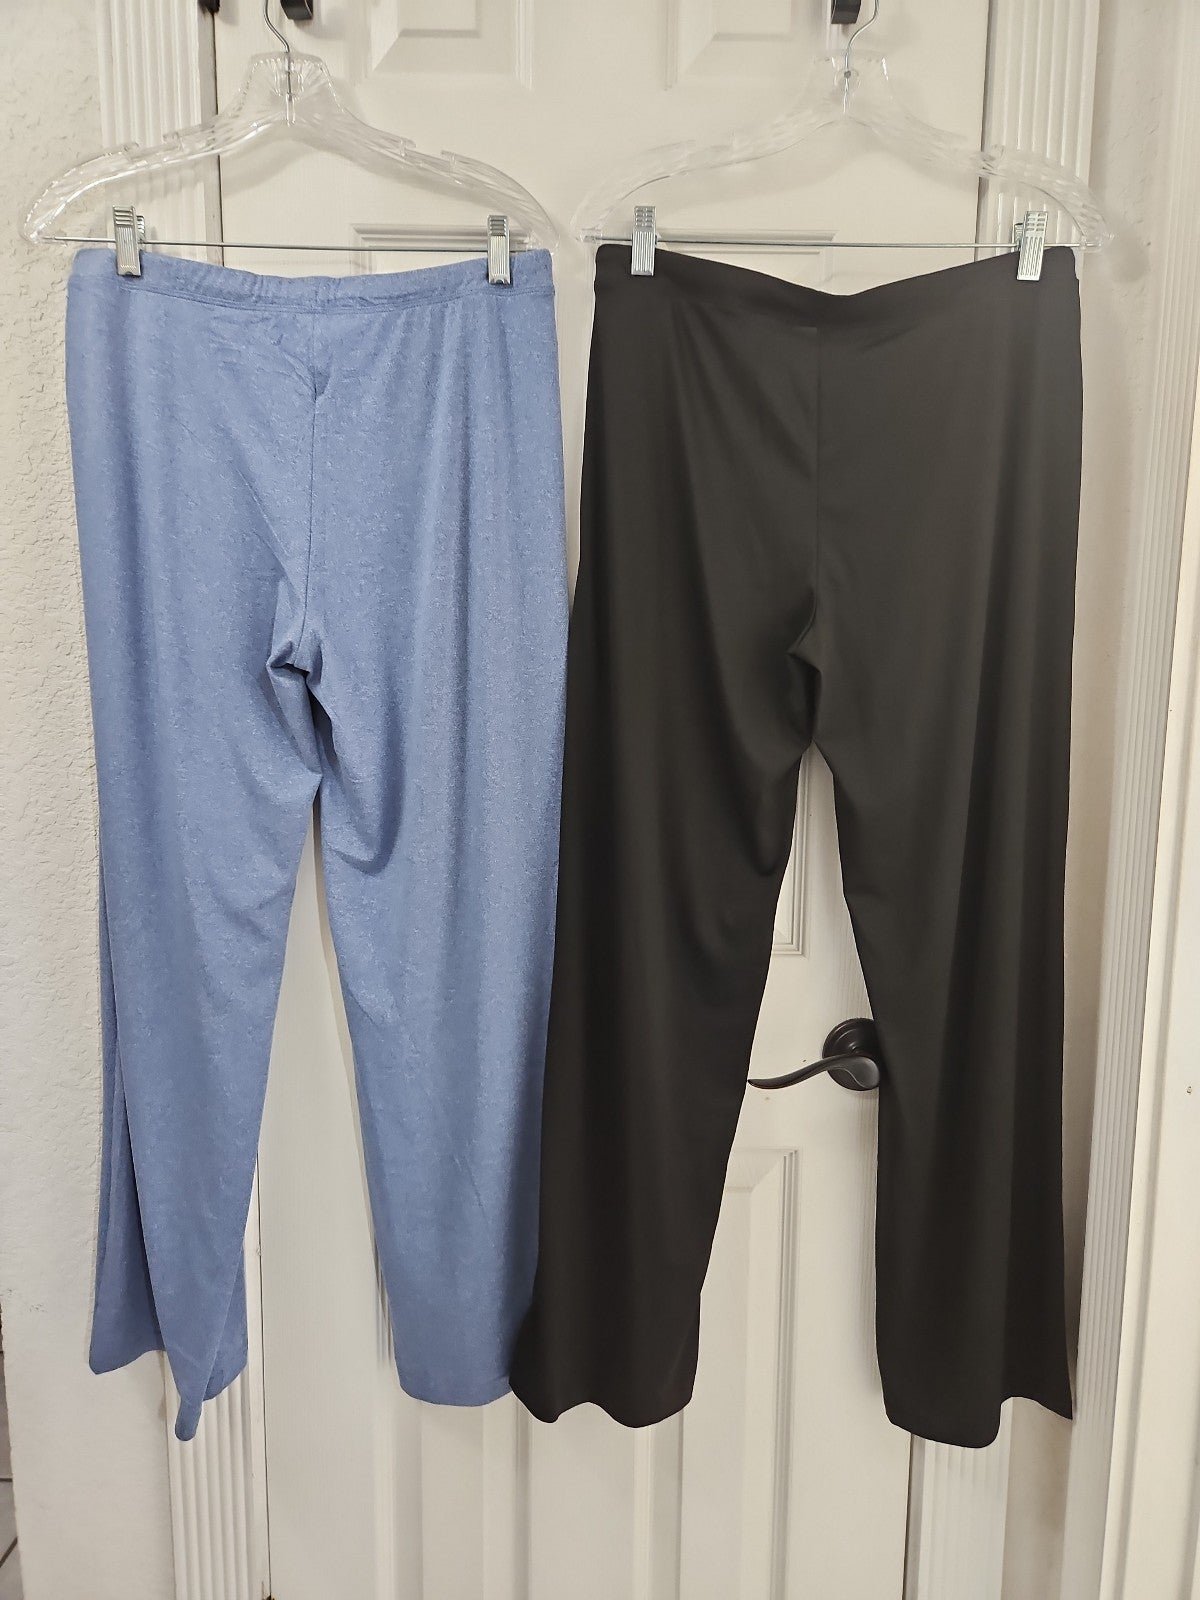 the Lowest price NWT A Pair of 32° Degrees Cool Sleepwear Pants g7QbjNSLQ no tax